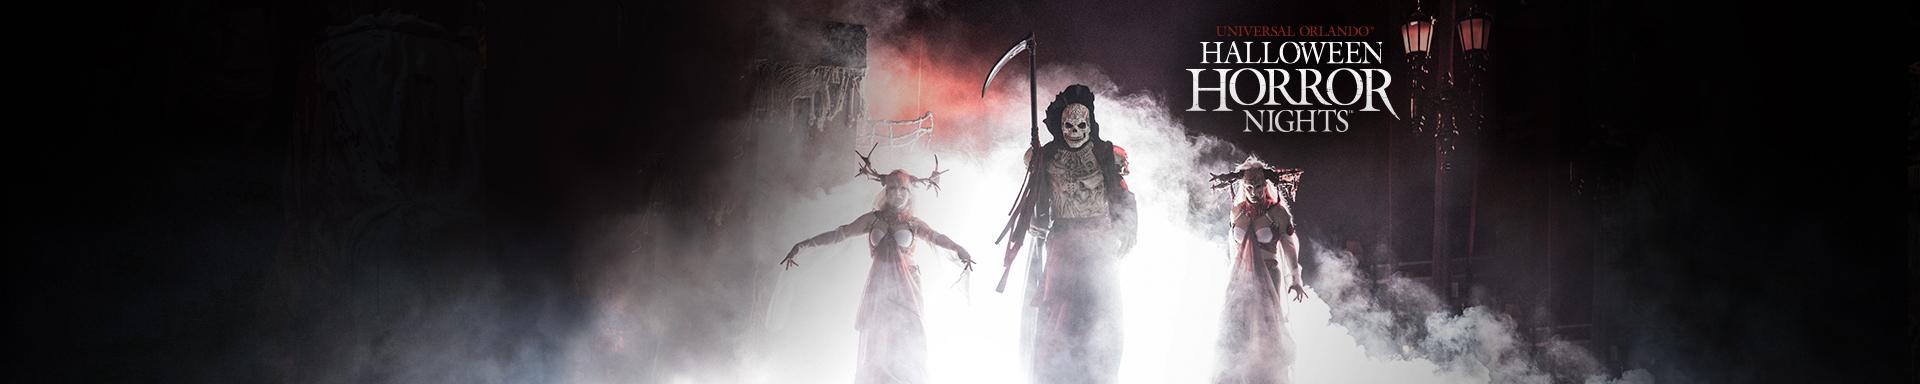 Halloween Horror Nights™ no Universal Orlando Resort™